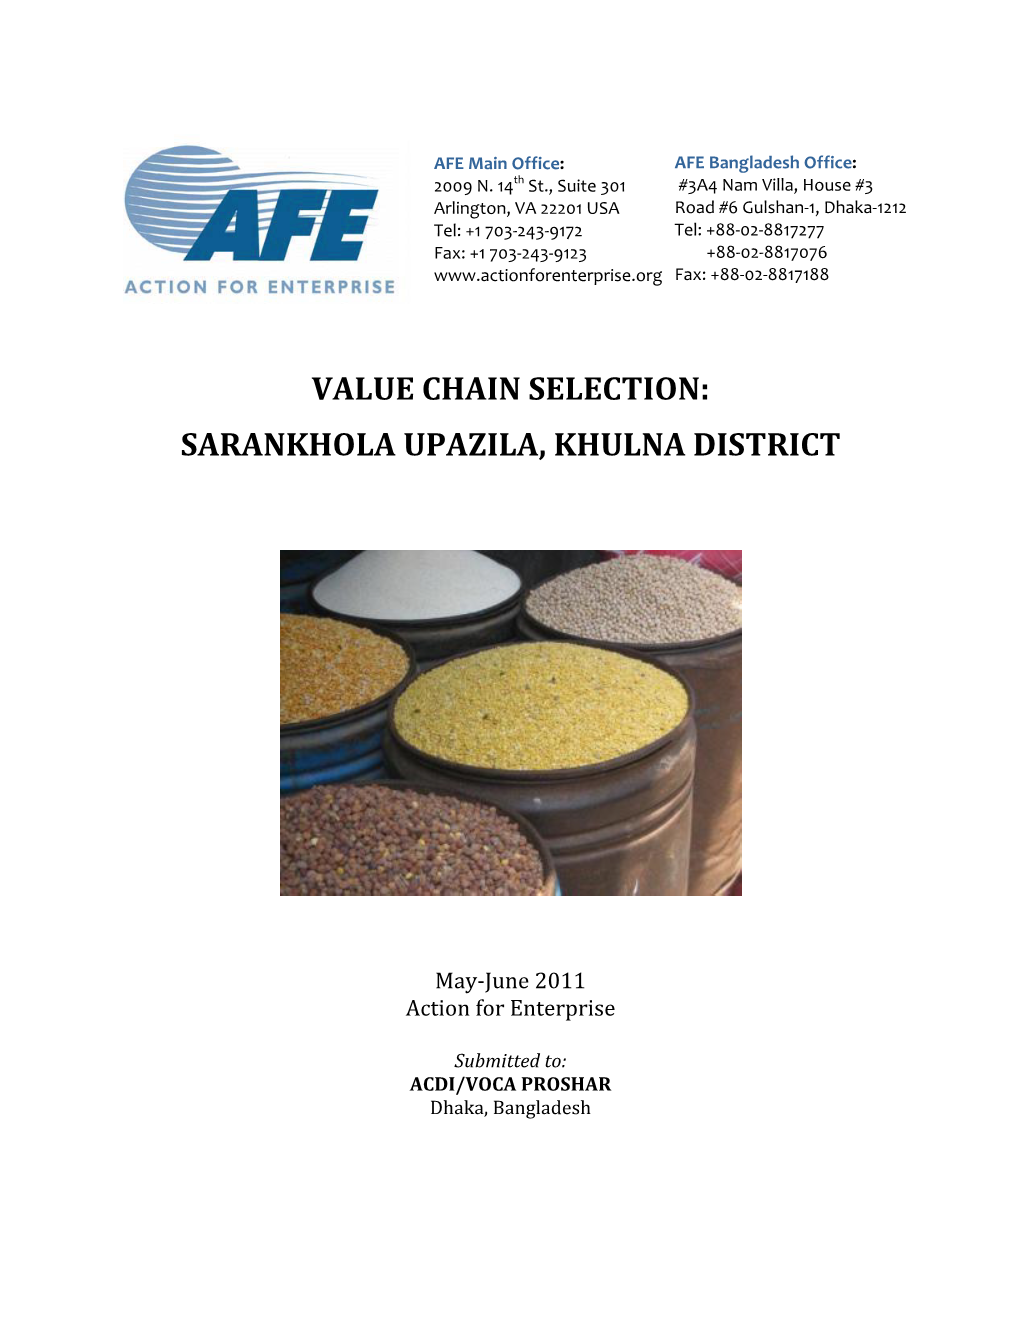 Value Chain Selection: Sarankhola Upazila, Khulna District